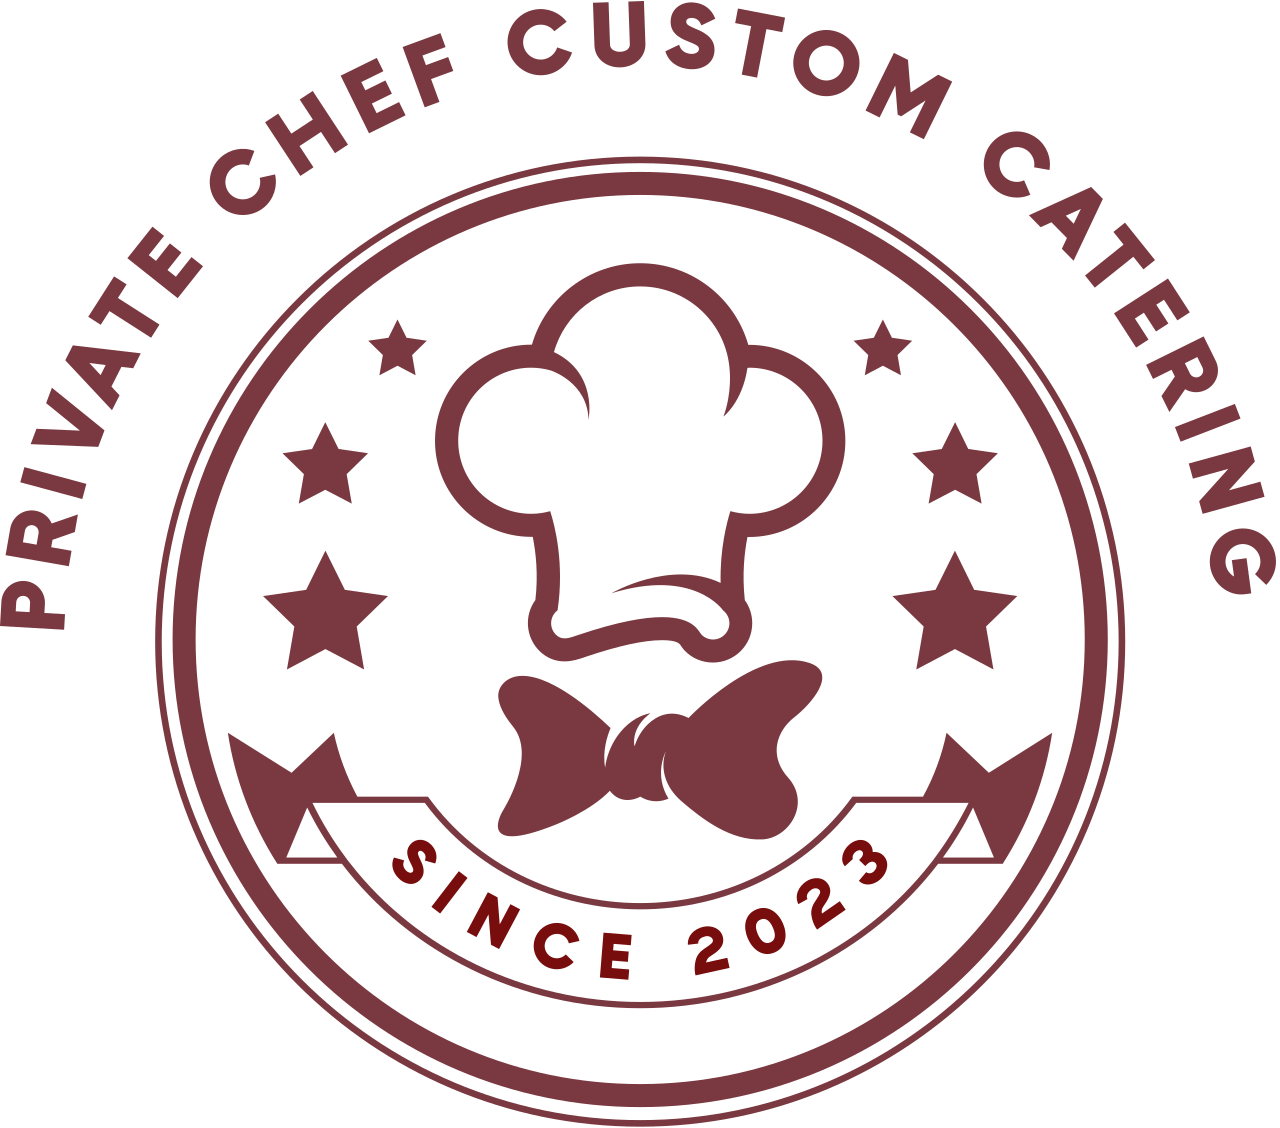 Private Chef Custom Catering 's logo